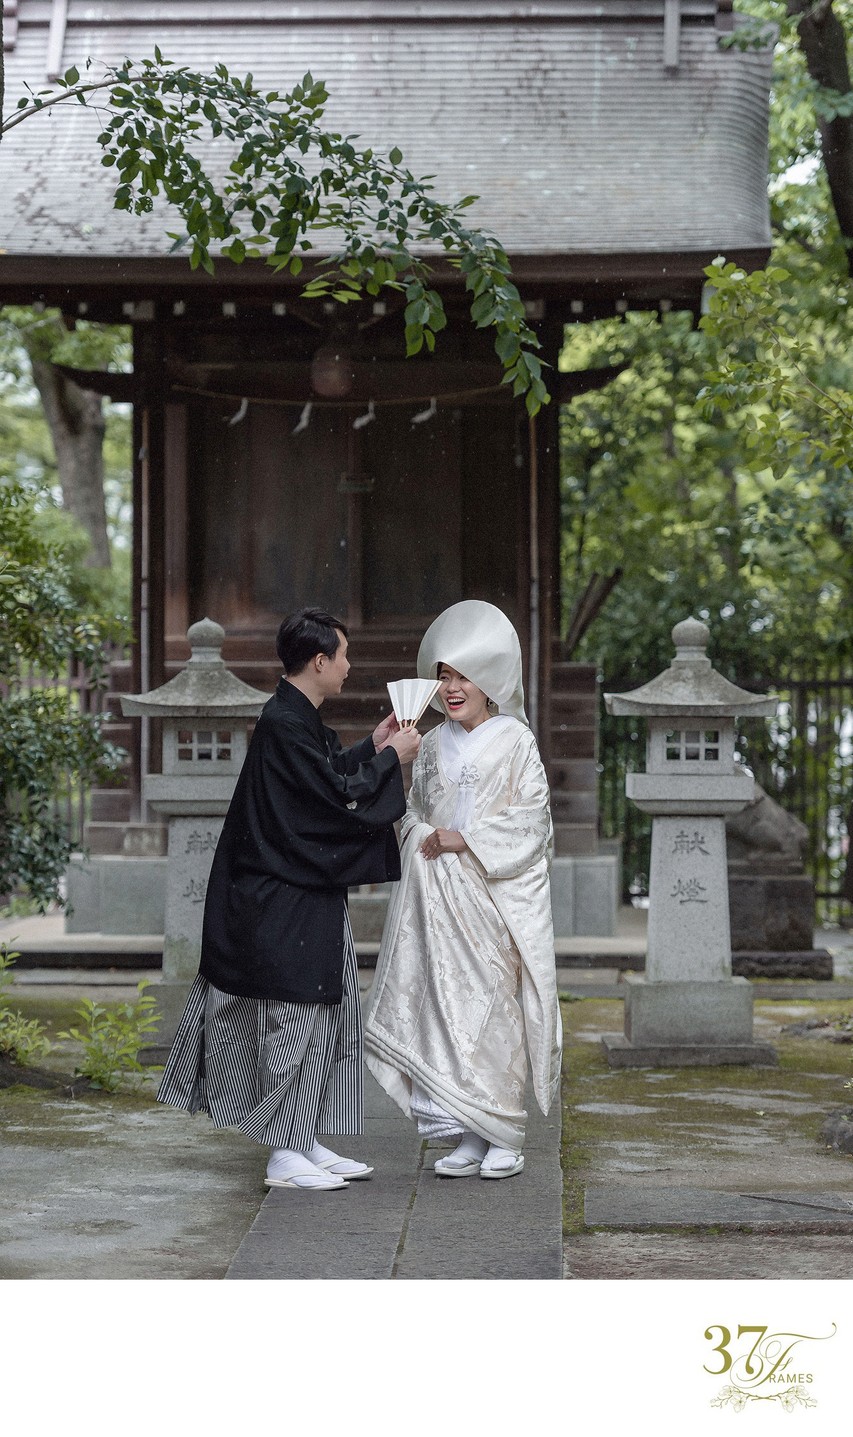 Wedding Photographer Japan | Shrine Moments